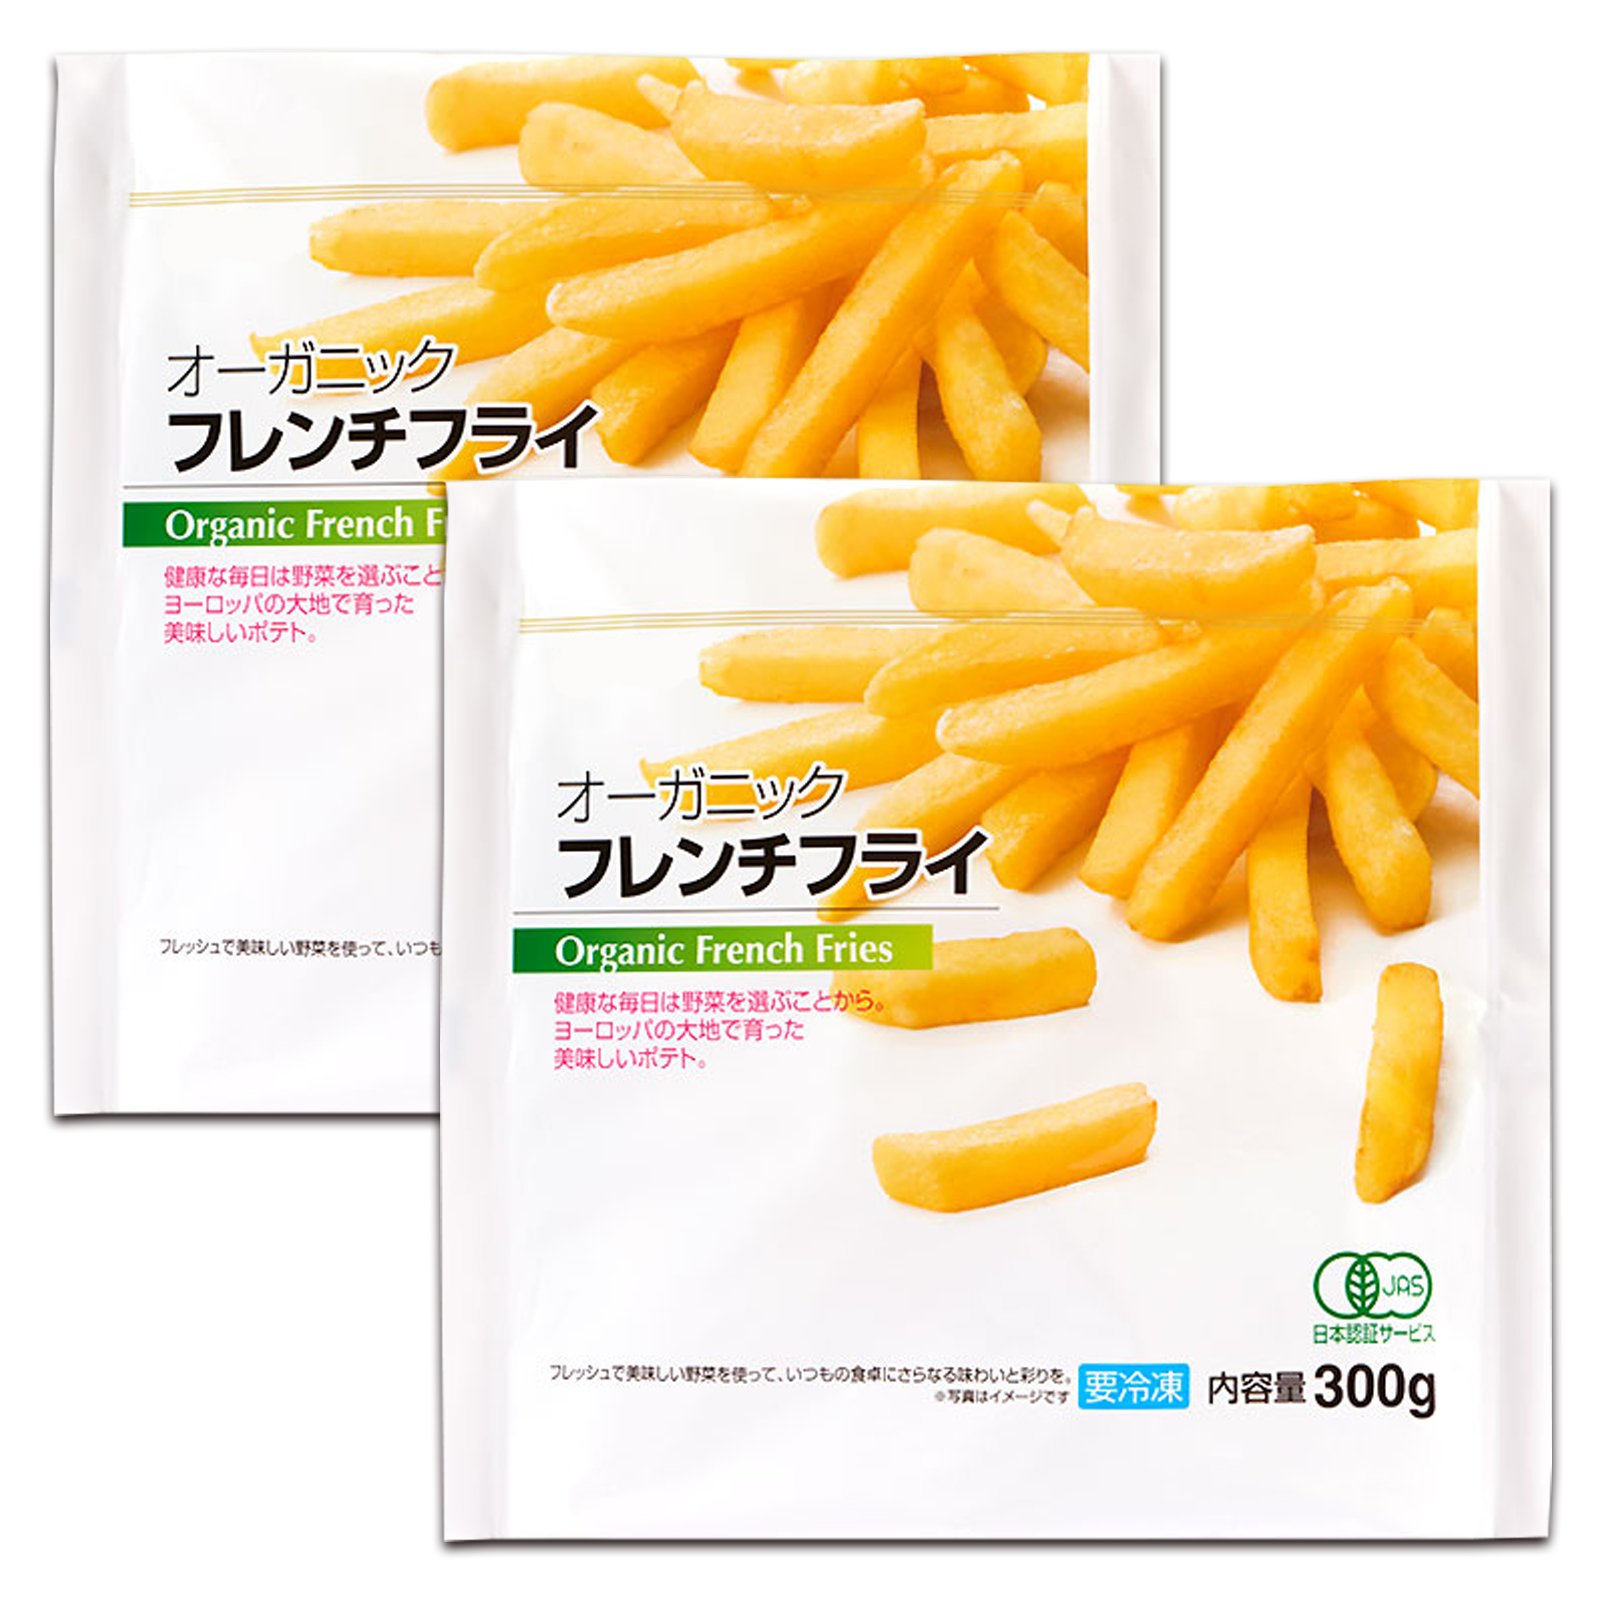 Certified Organic Frozen French Fries from Belgium (600g-1kg) - Horizon Farms